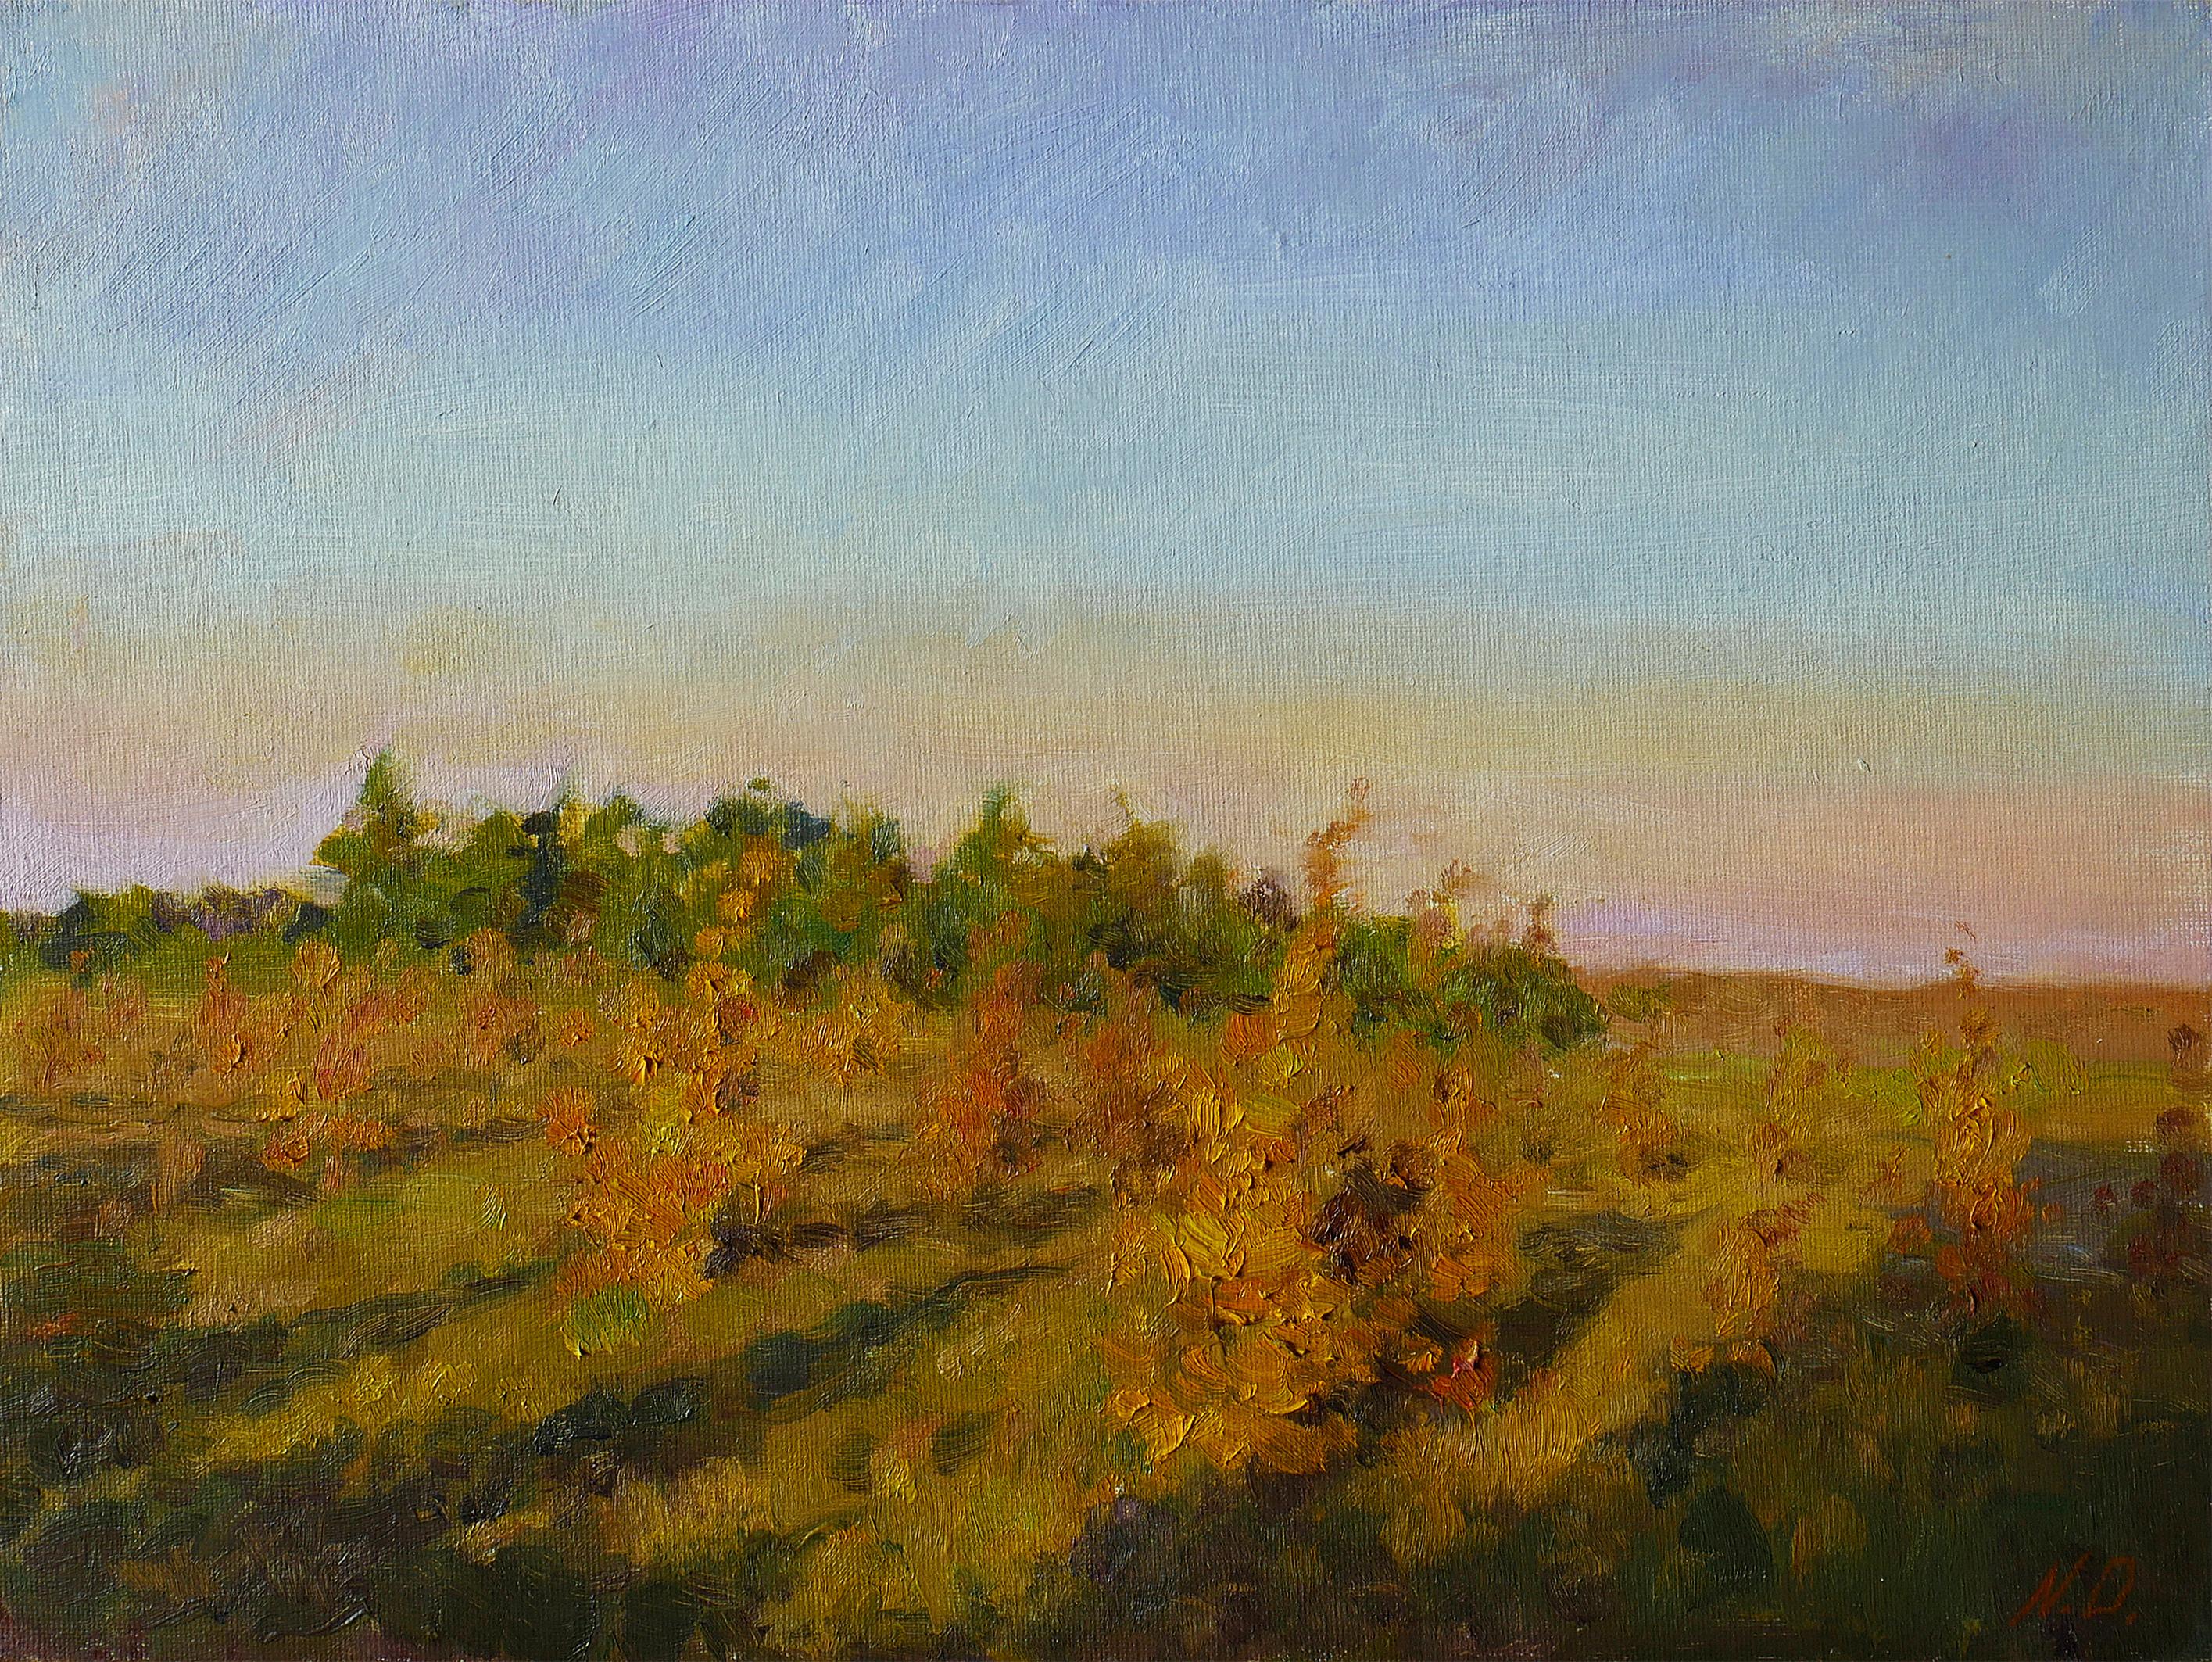 Nikolay Dmitriev Interior Painting - The Autumn Sunset - sunset landscape painting